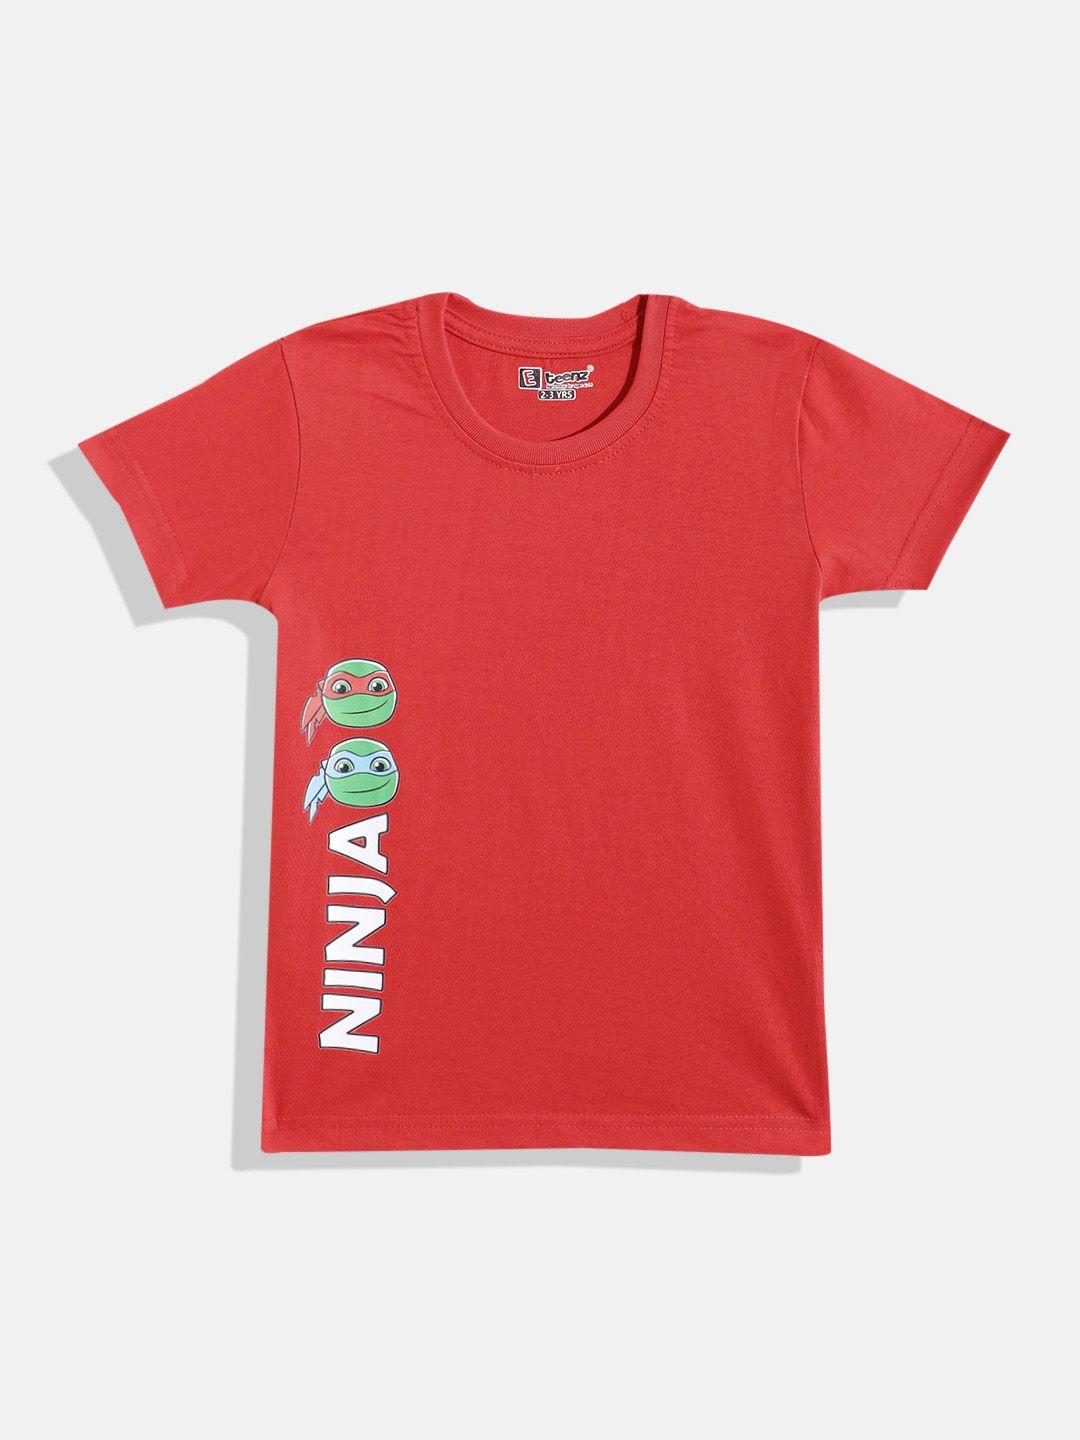 eteenz boys premium cotton mutant ninja turtle printed t-shirt